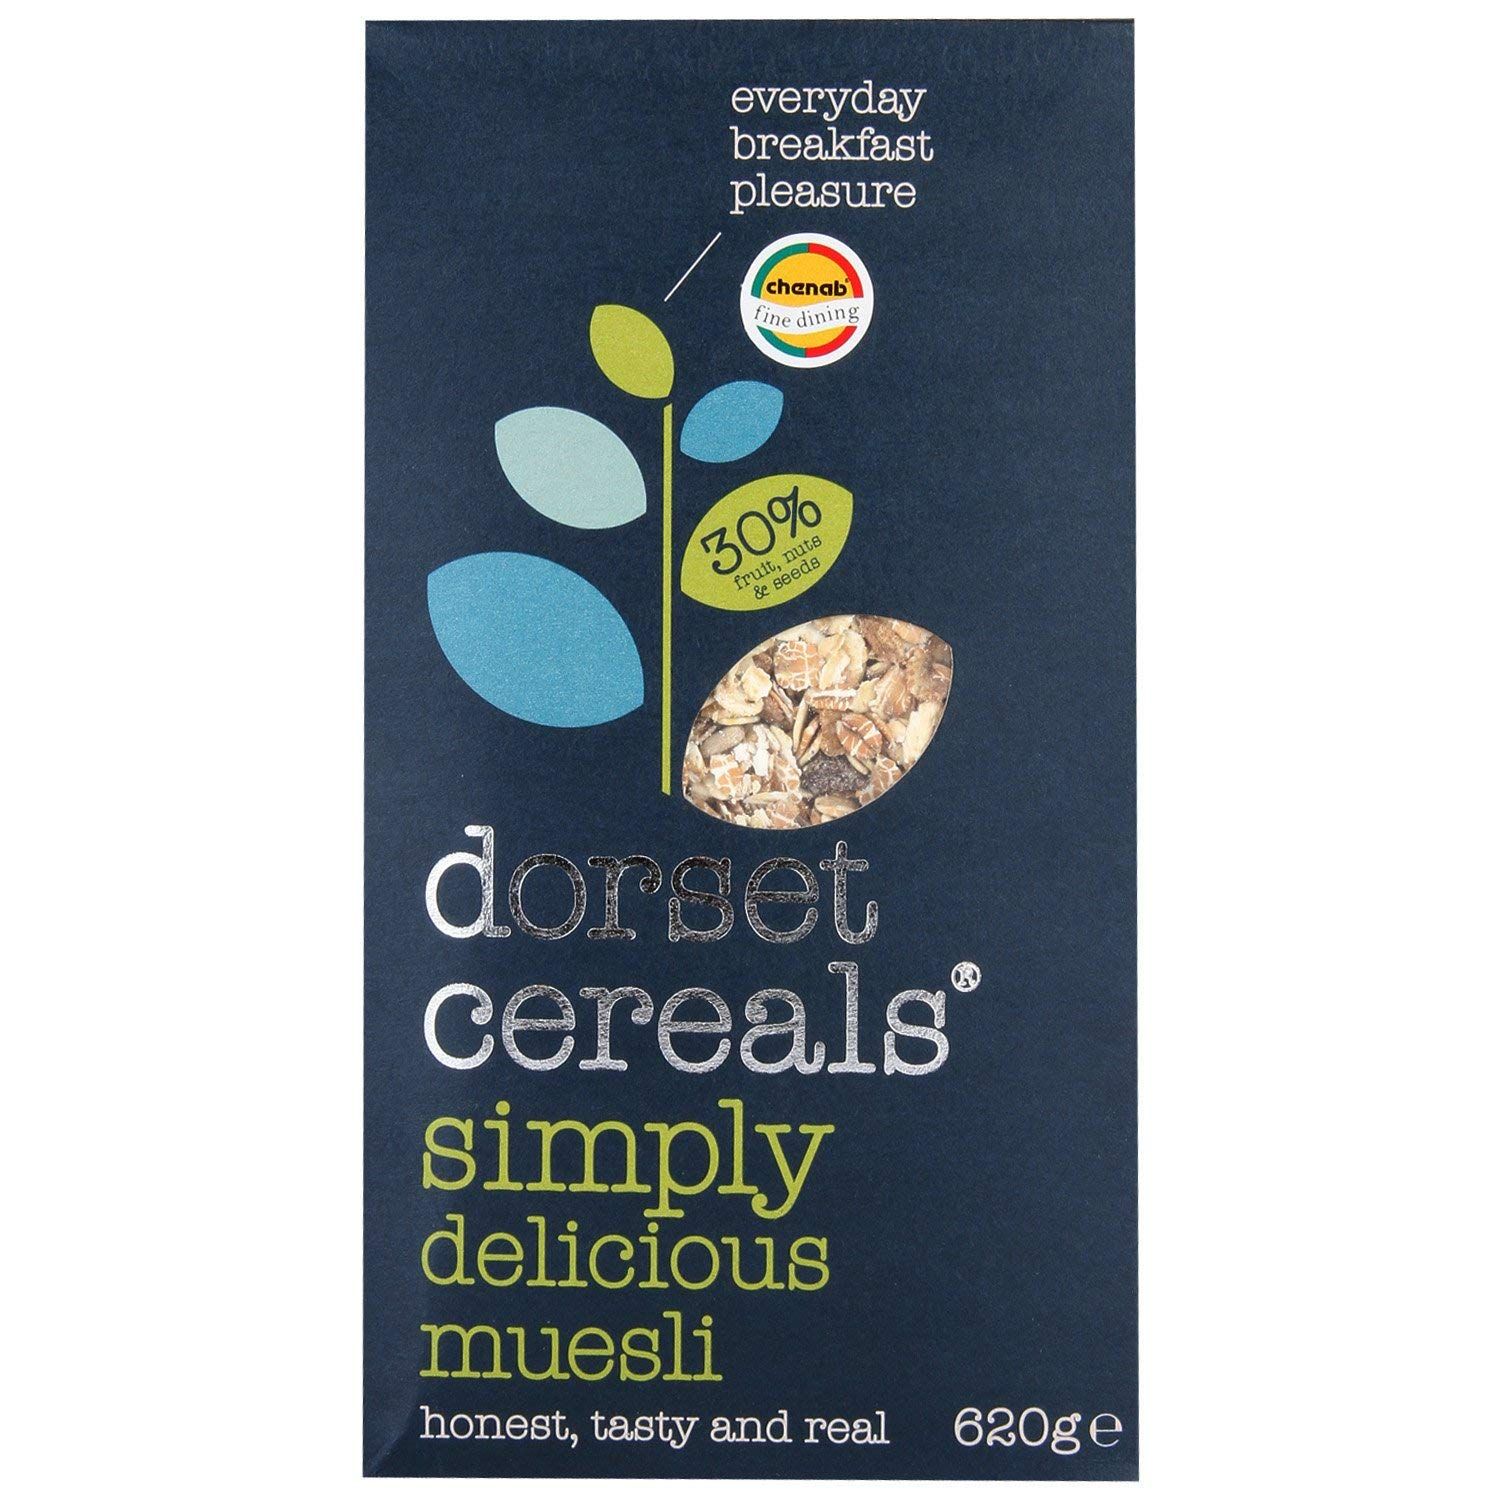 Dorset Cereals Simply Delicious Muesli Image